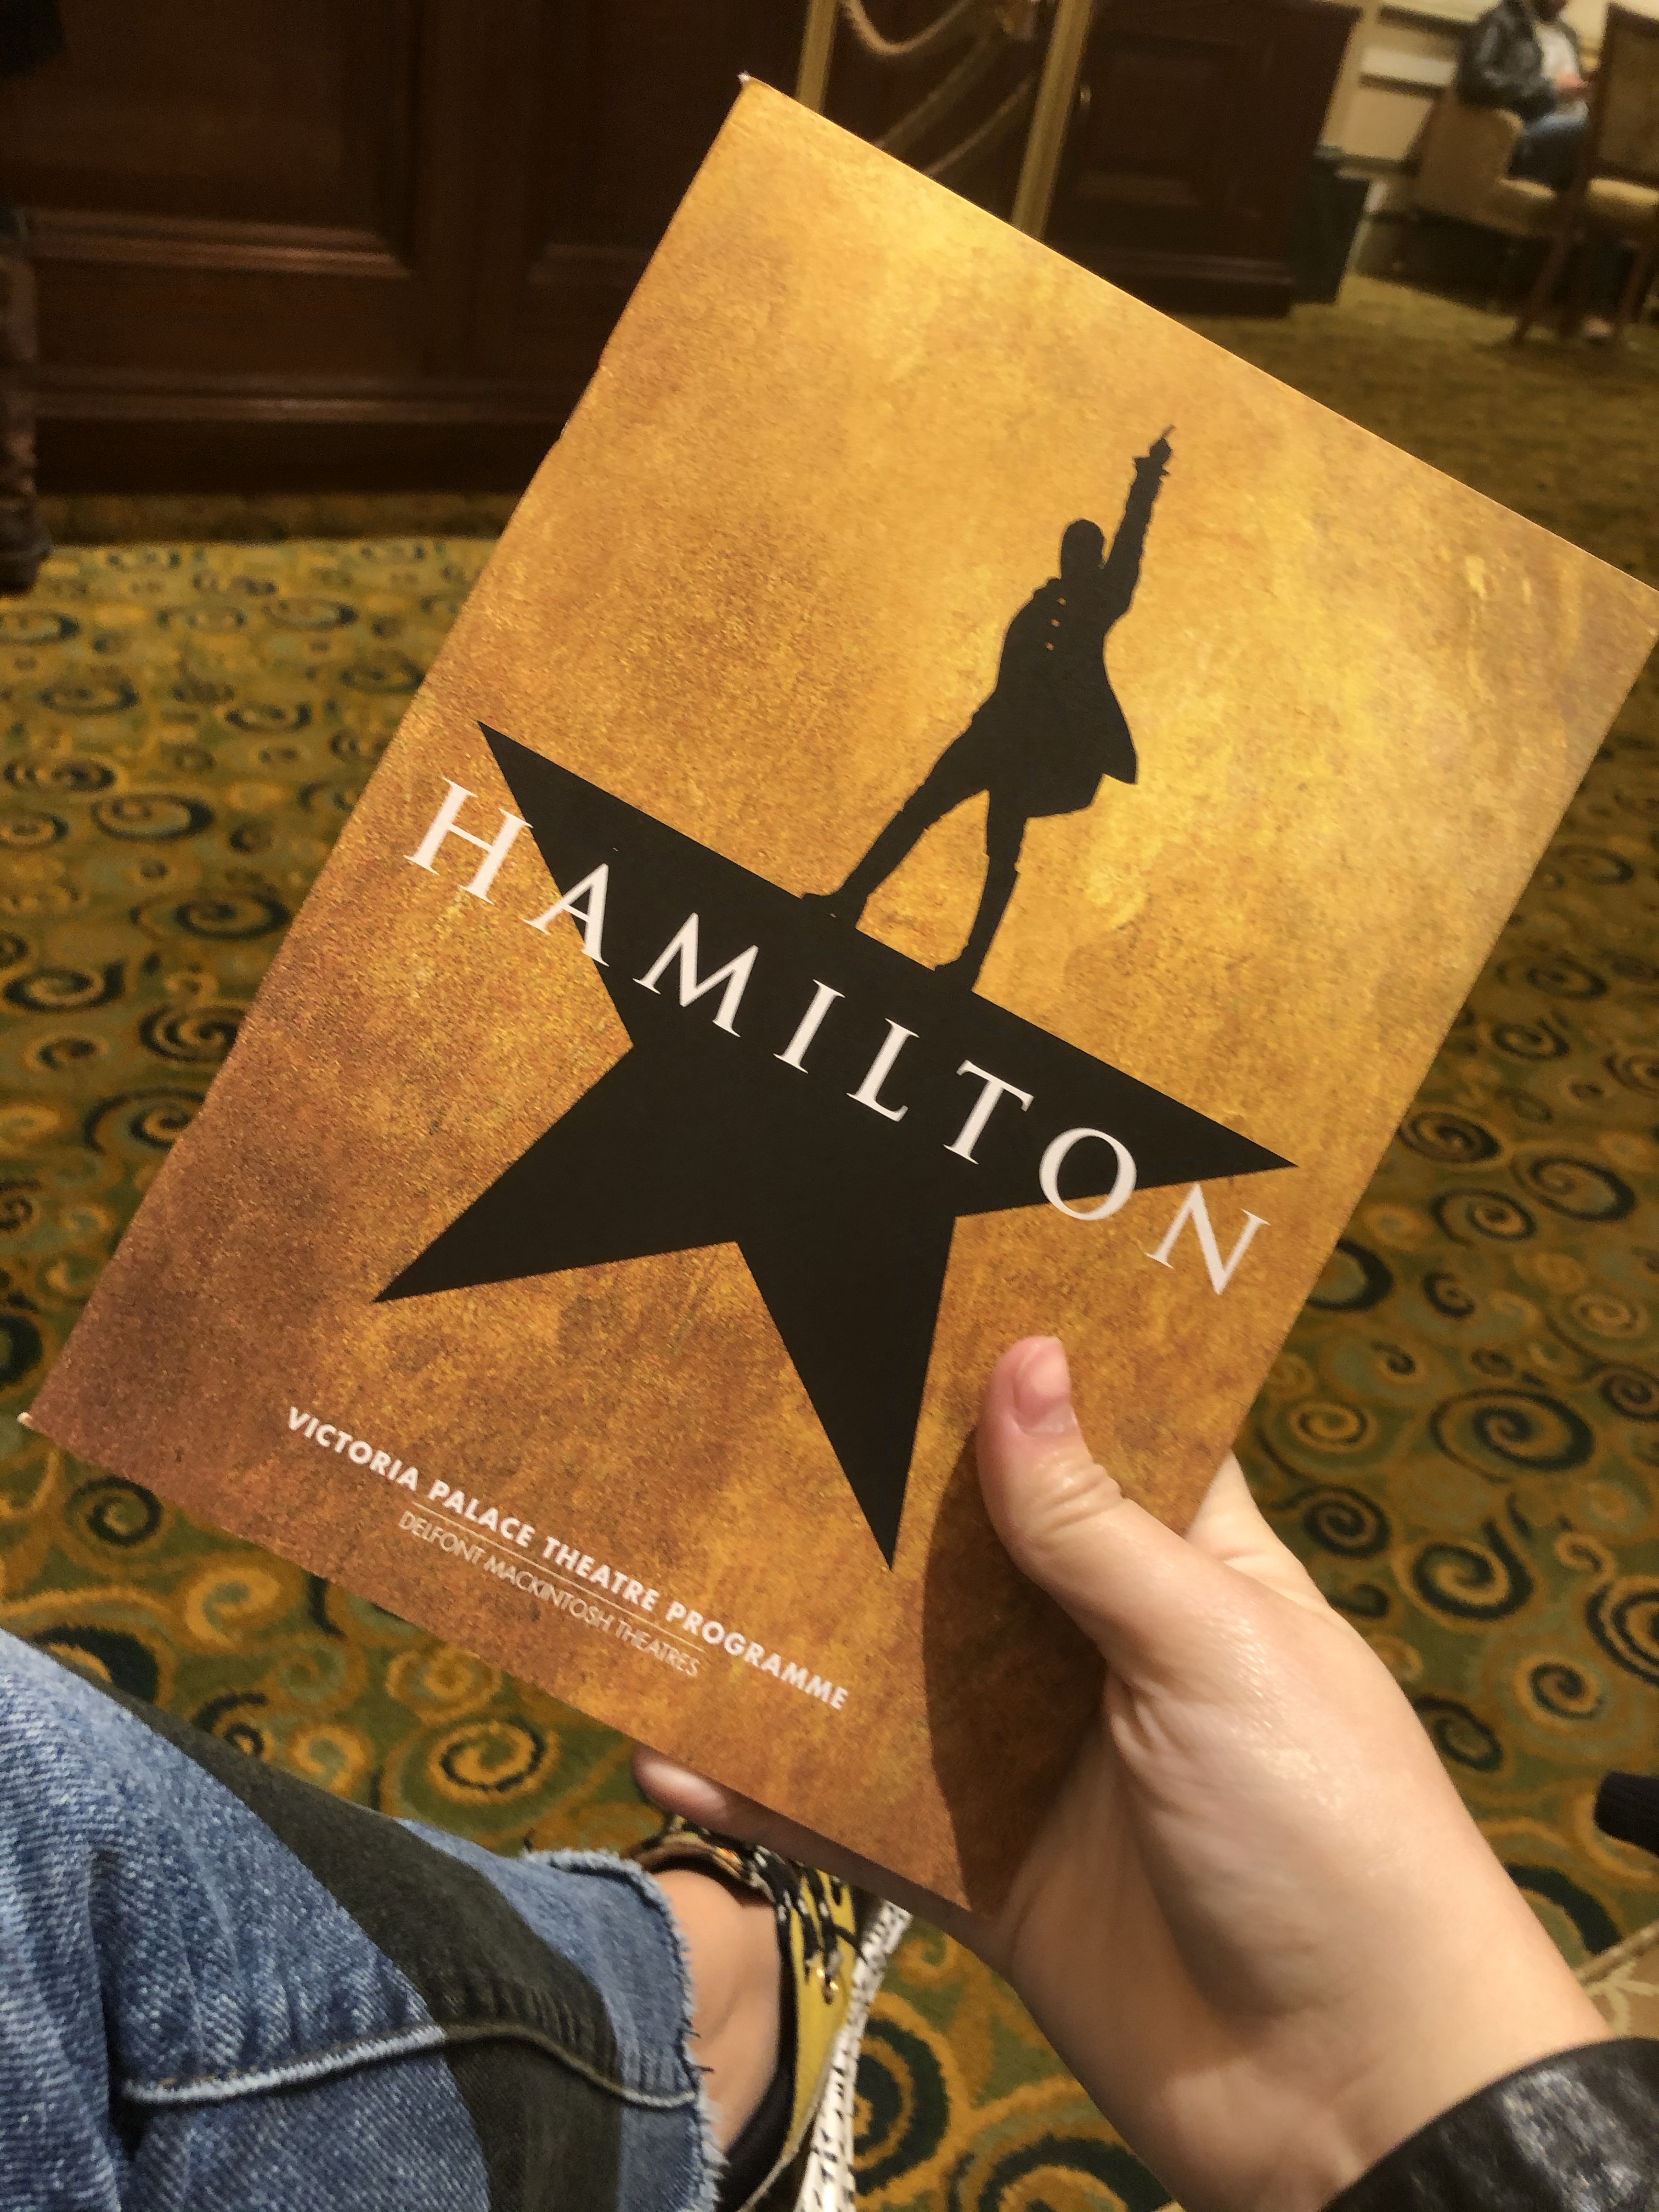 The Hamilton playbook